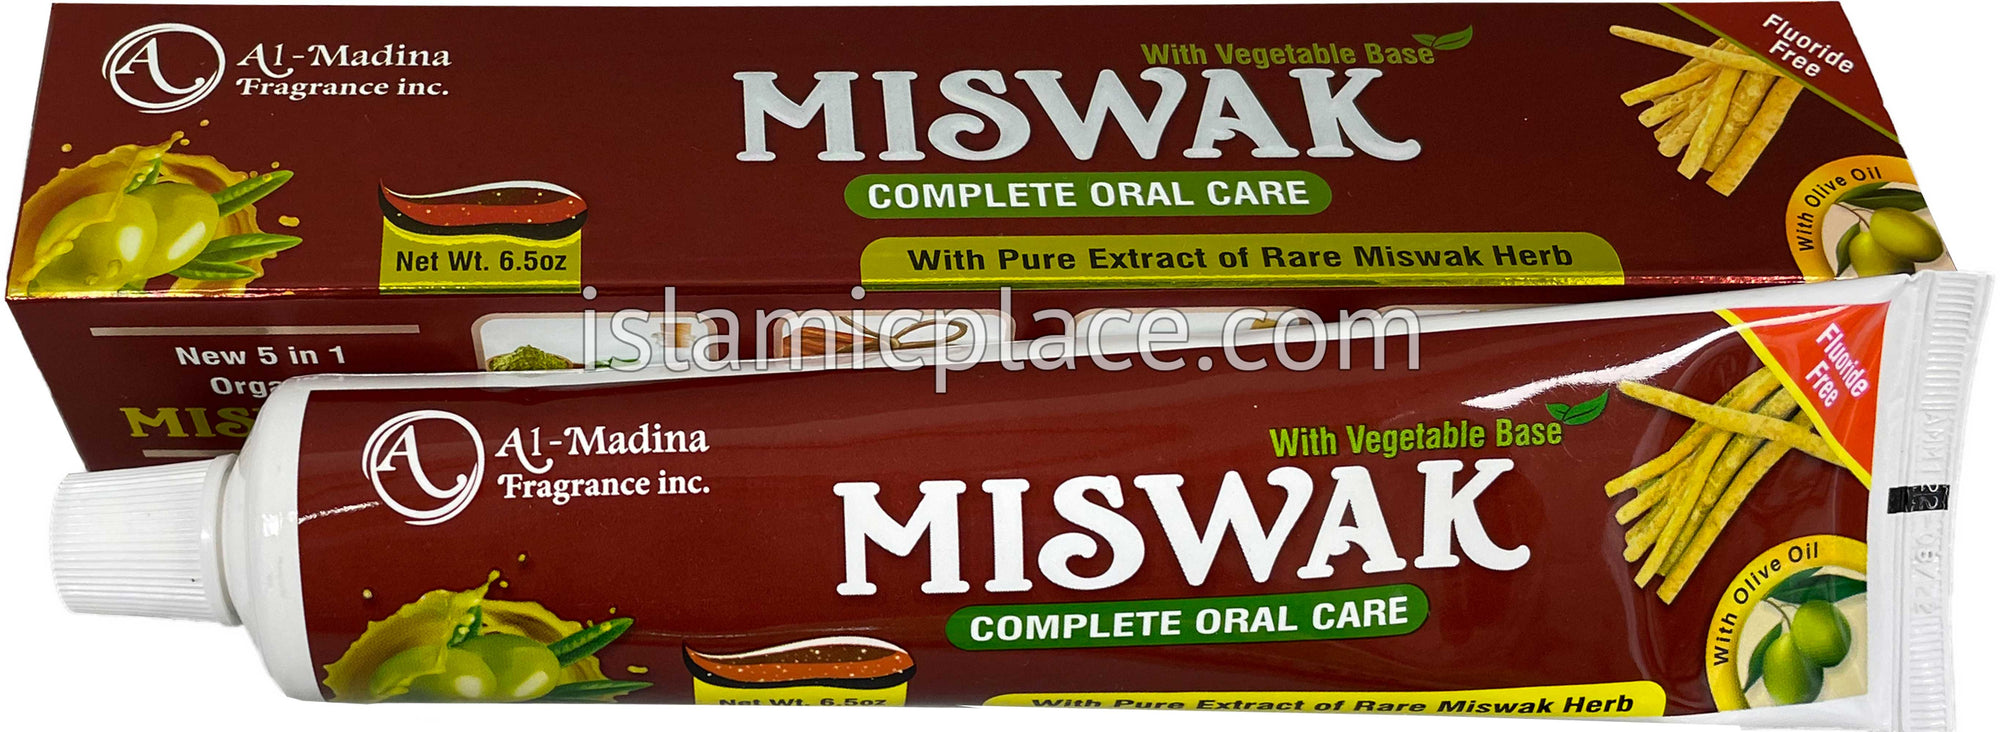 Miswak Toothpaste - 5 in 1 (Miswak, Moringa, Honey, Cinnamon, Olive) 6.5 oz - Halal & Organic